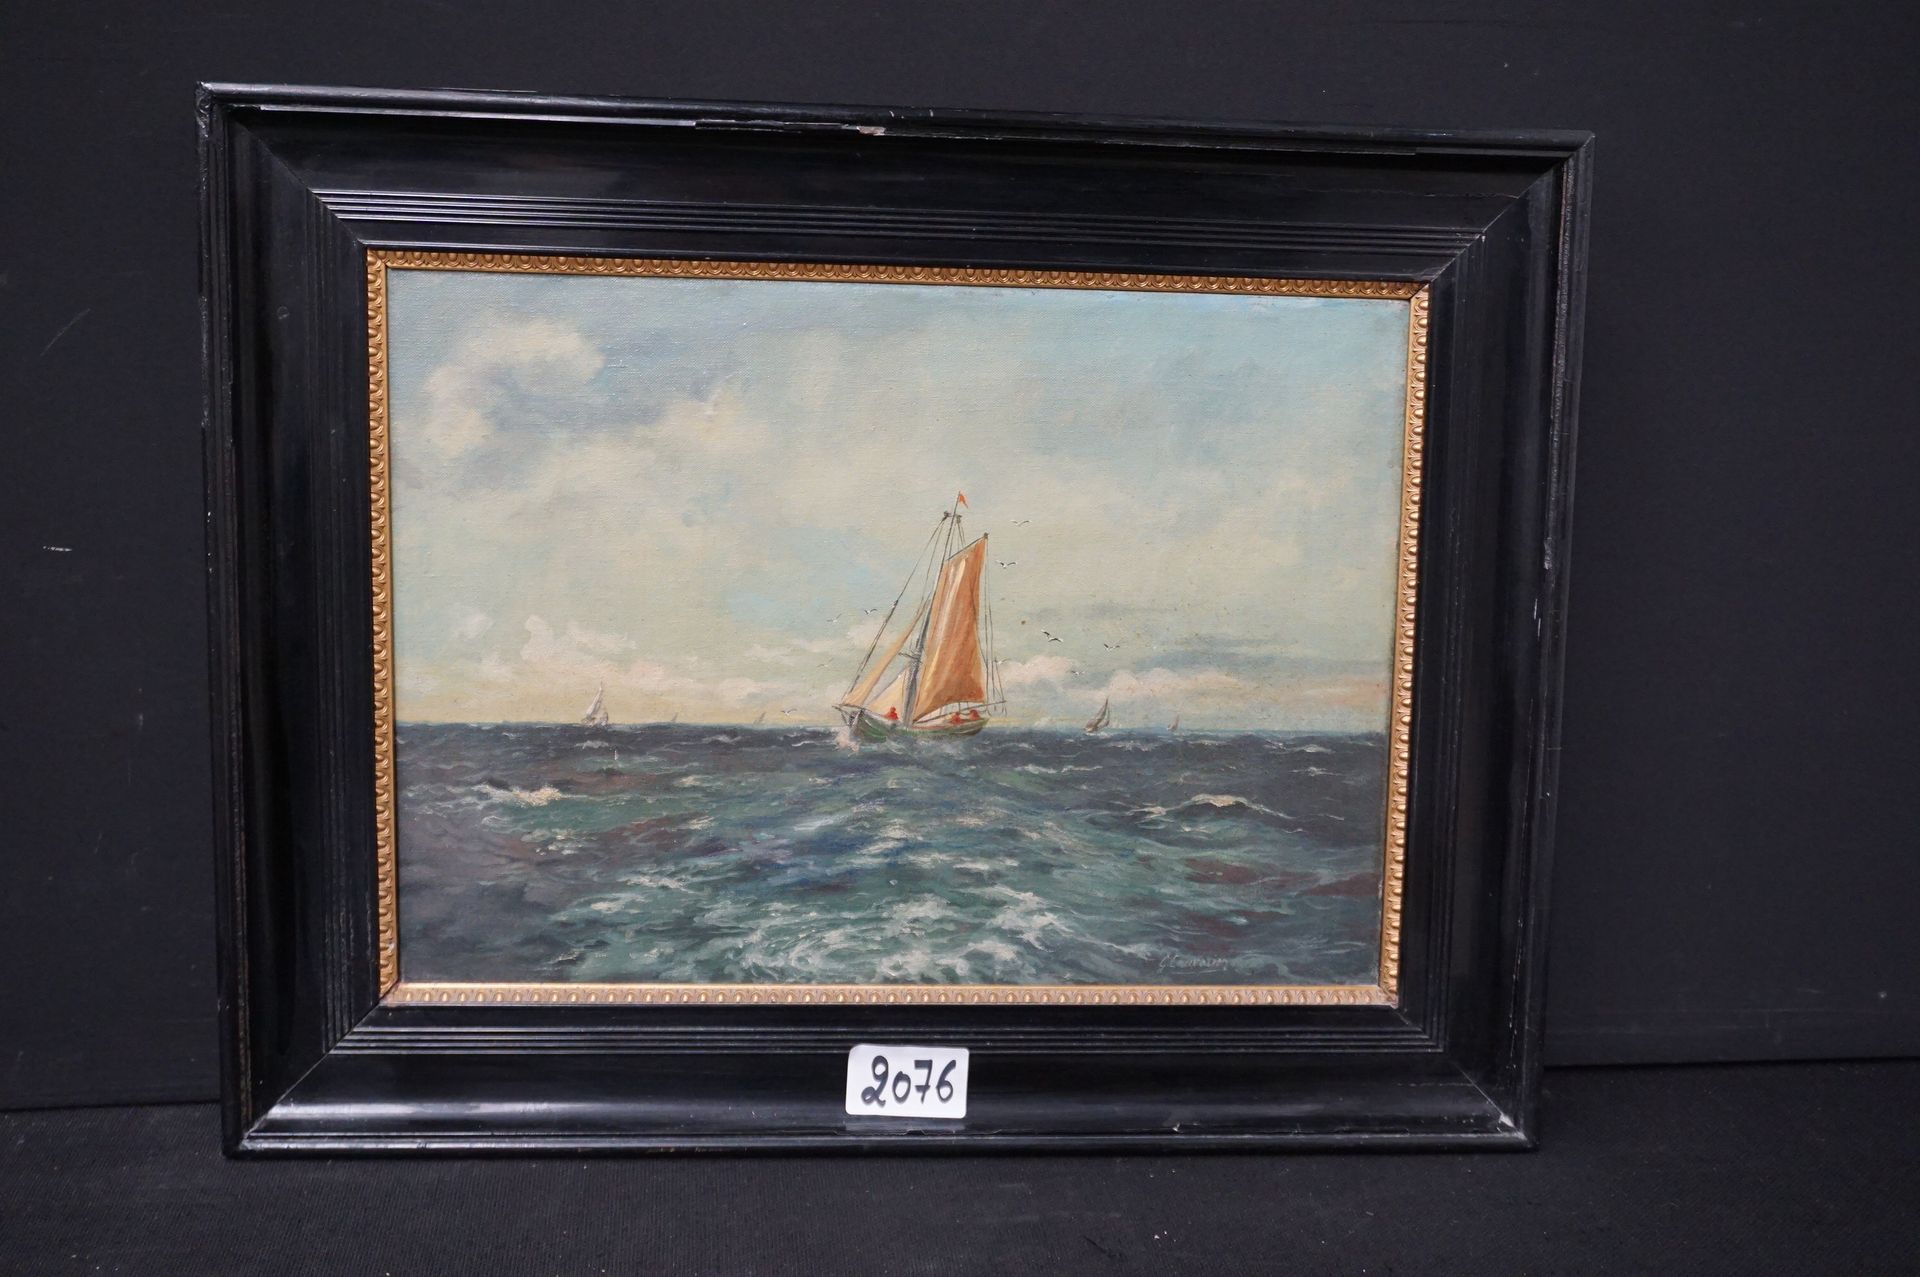 Null Gemälde - "Marine" - Öl auf Leinwand - Signiert - 38 x 53 cm